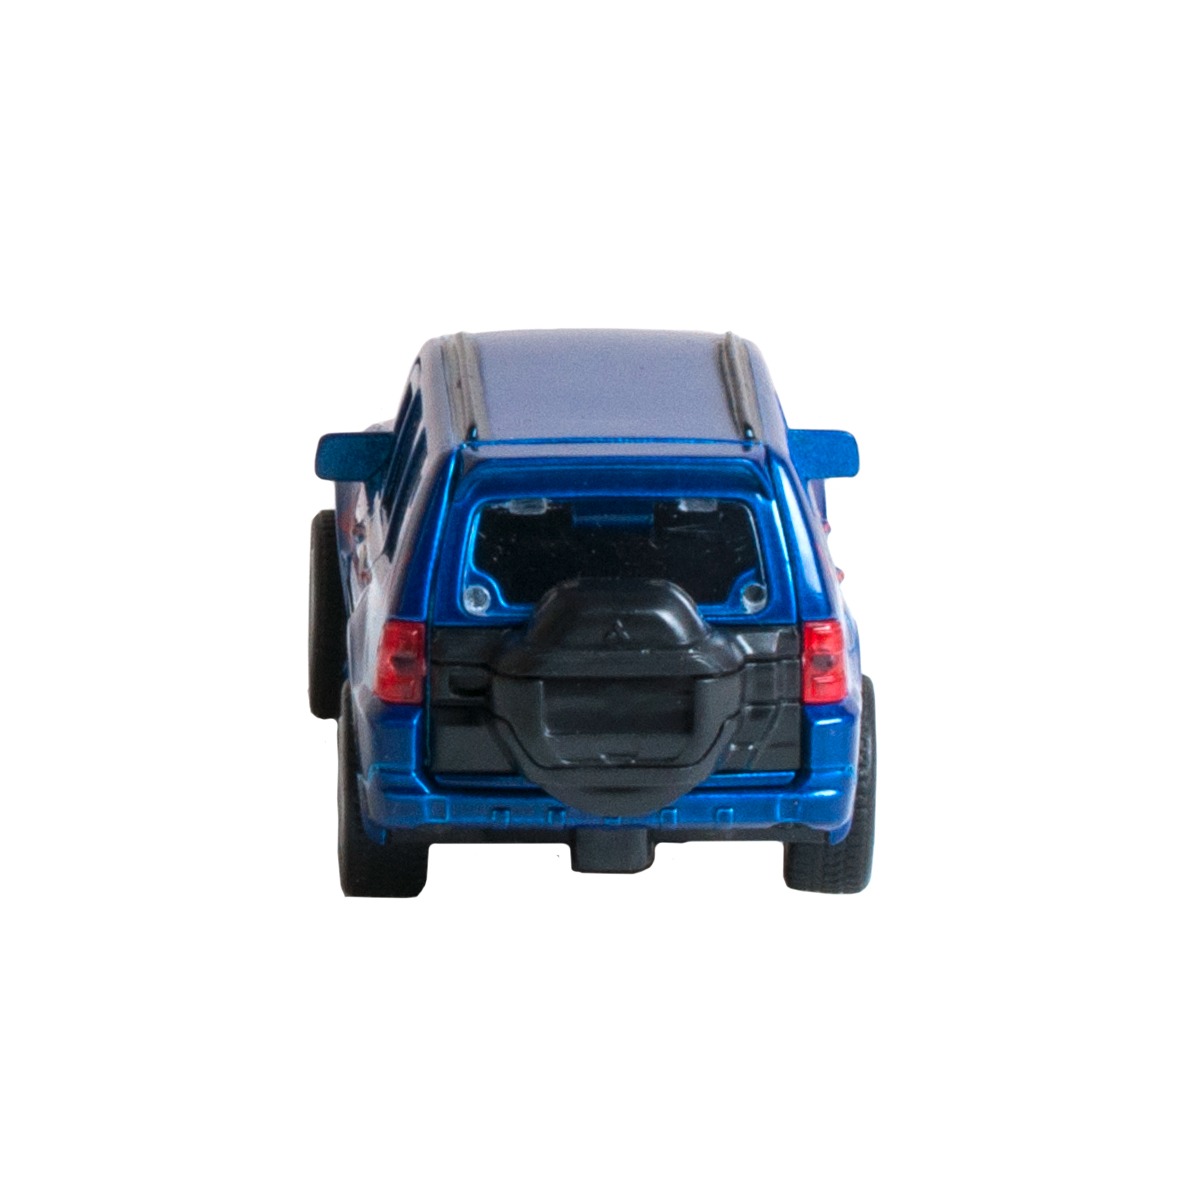 Автомодель Technopark Mitsubishi Pajero Sport (синий) (SB-17-61-MP-S-WB)